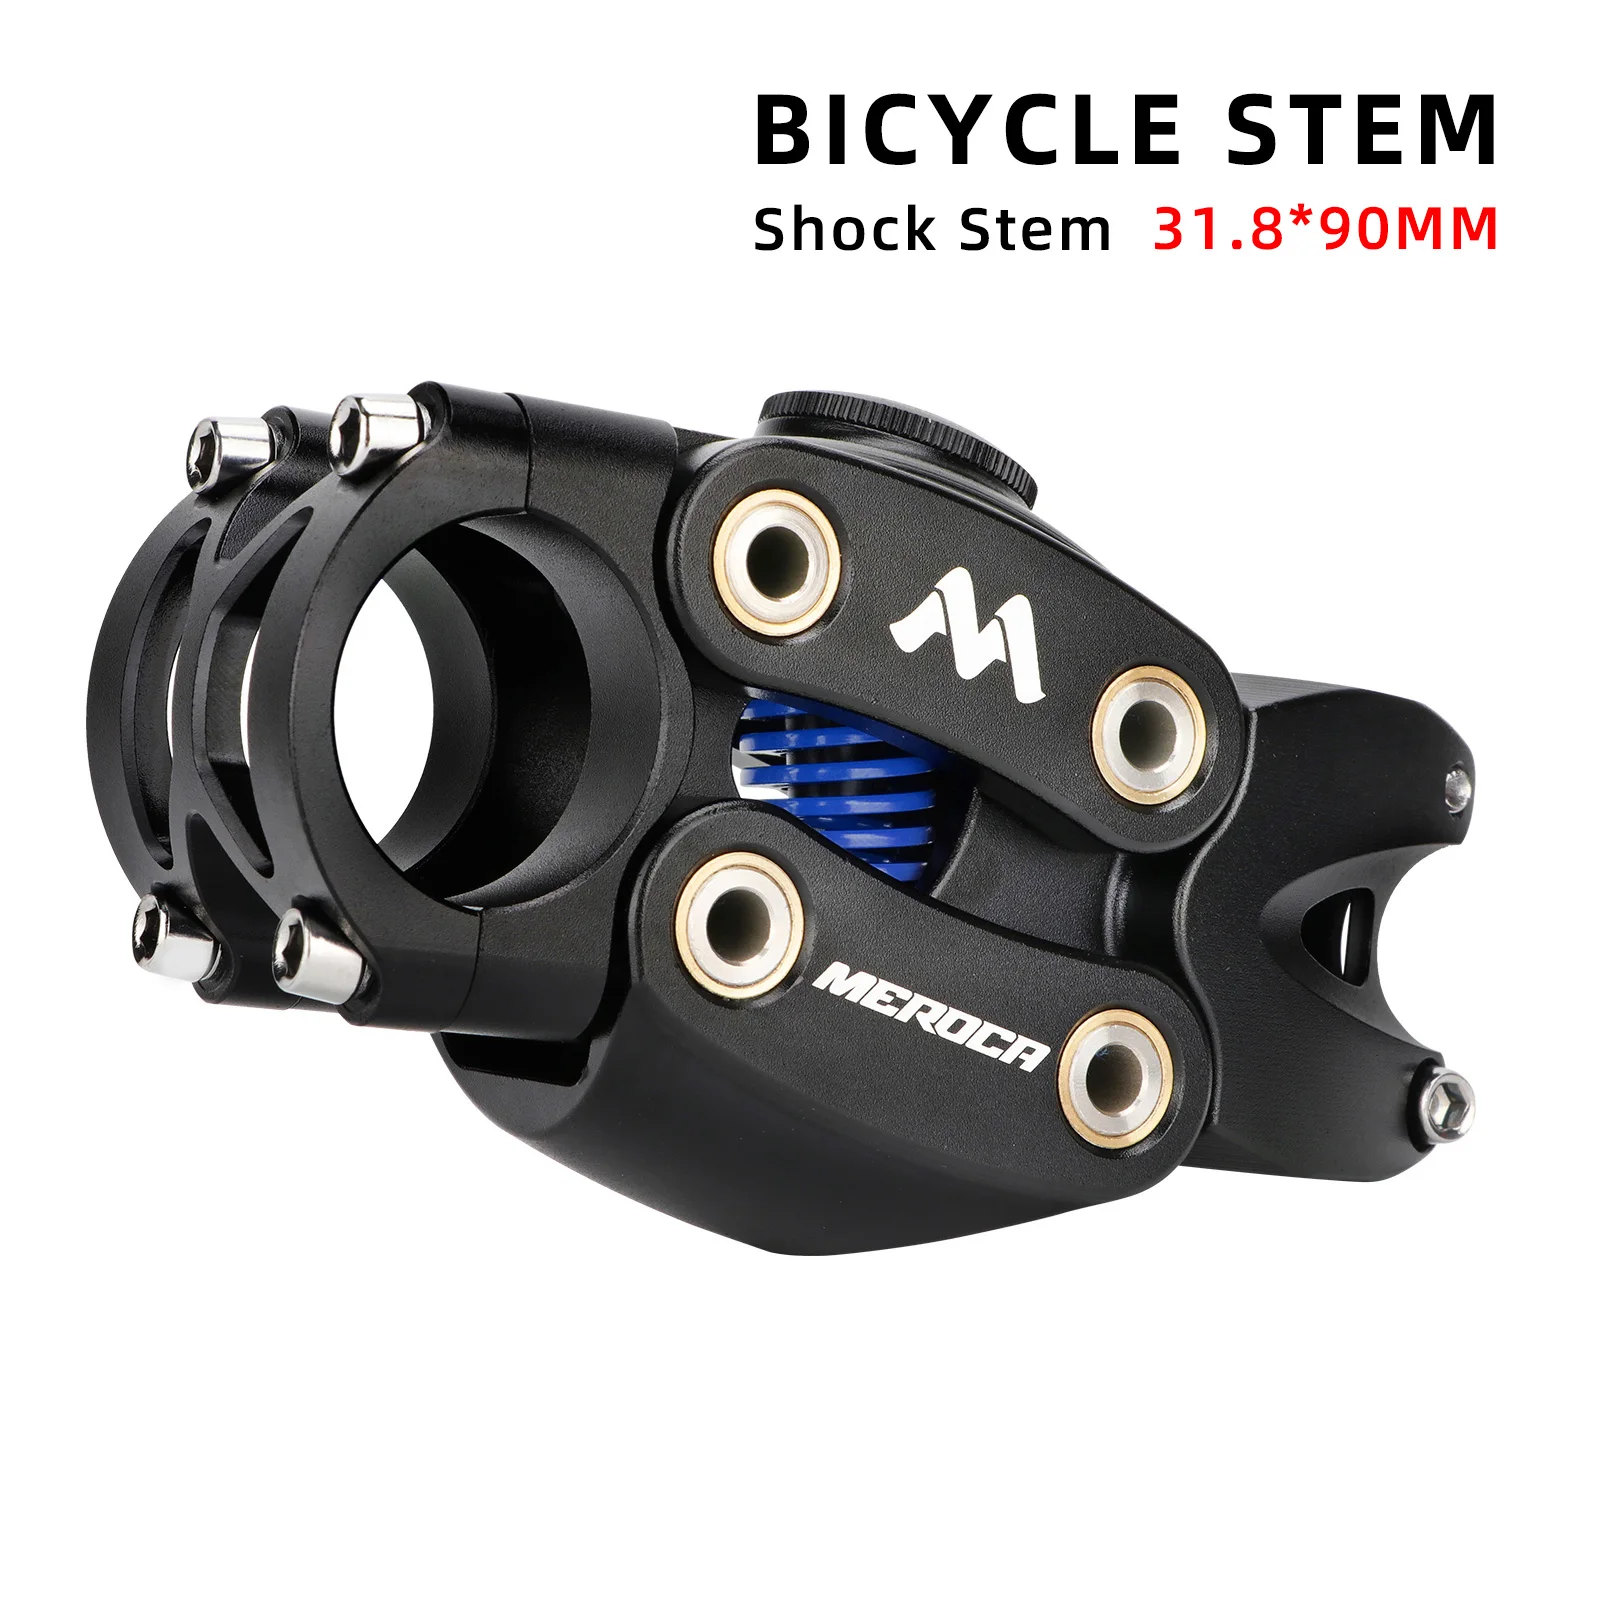 

MEROCA Bicycle Four link Shock Stem 31.8*90MM Aluminum alloy XC Grave Road Mountain Bike Risers Suspension Stems